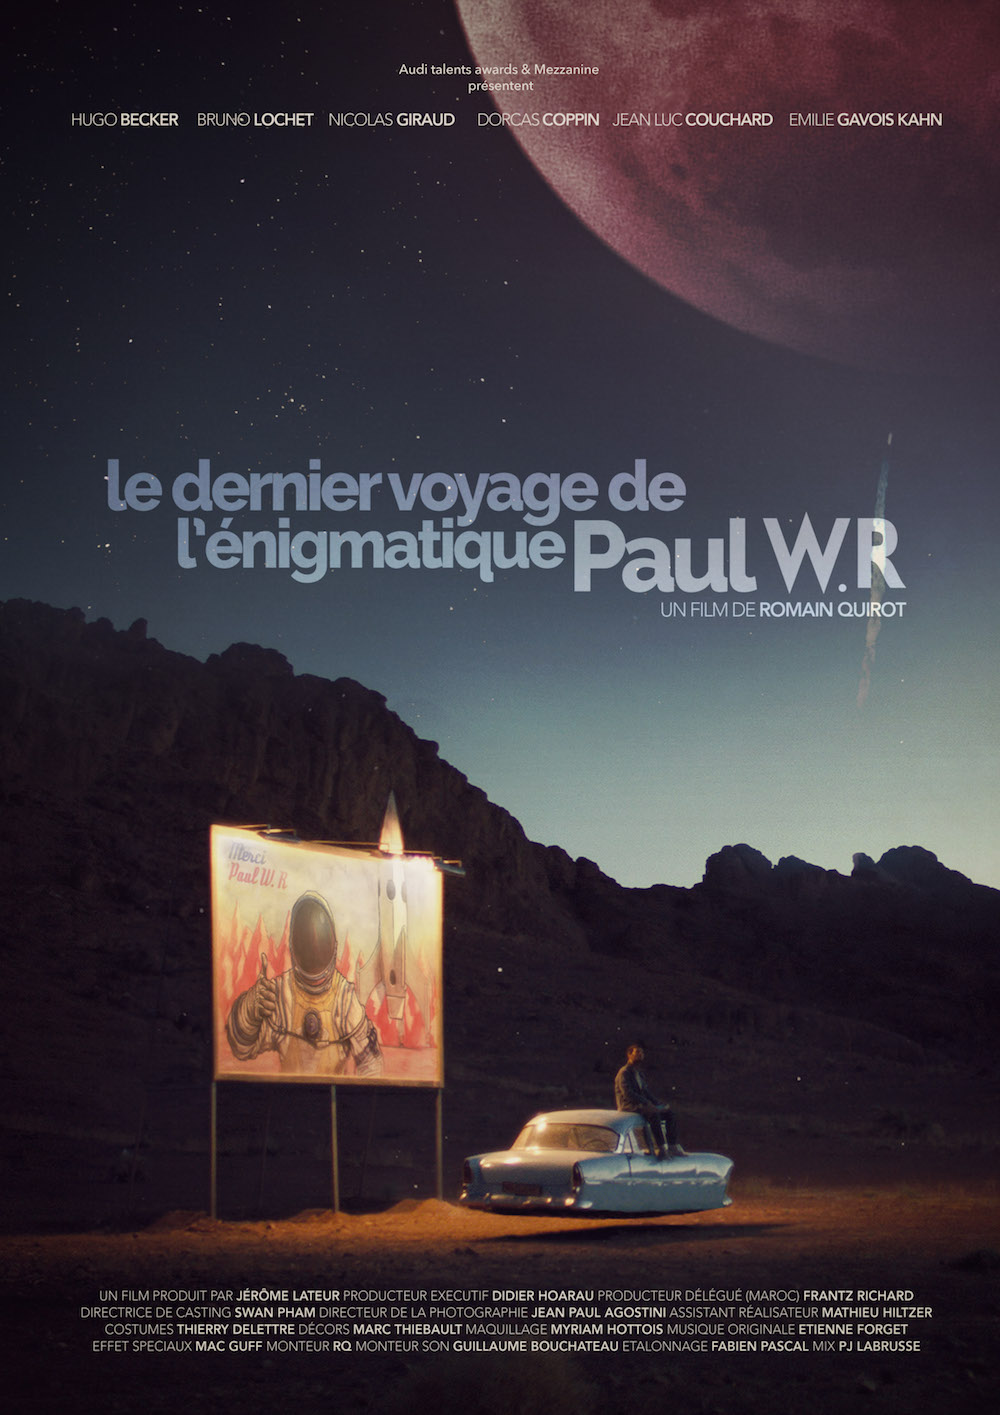 Paul W.R's Last Journey